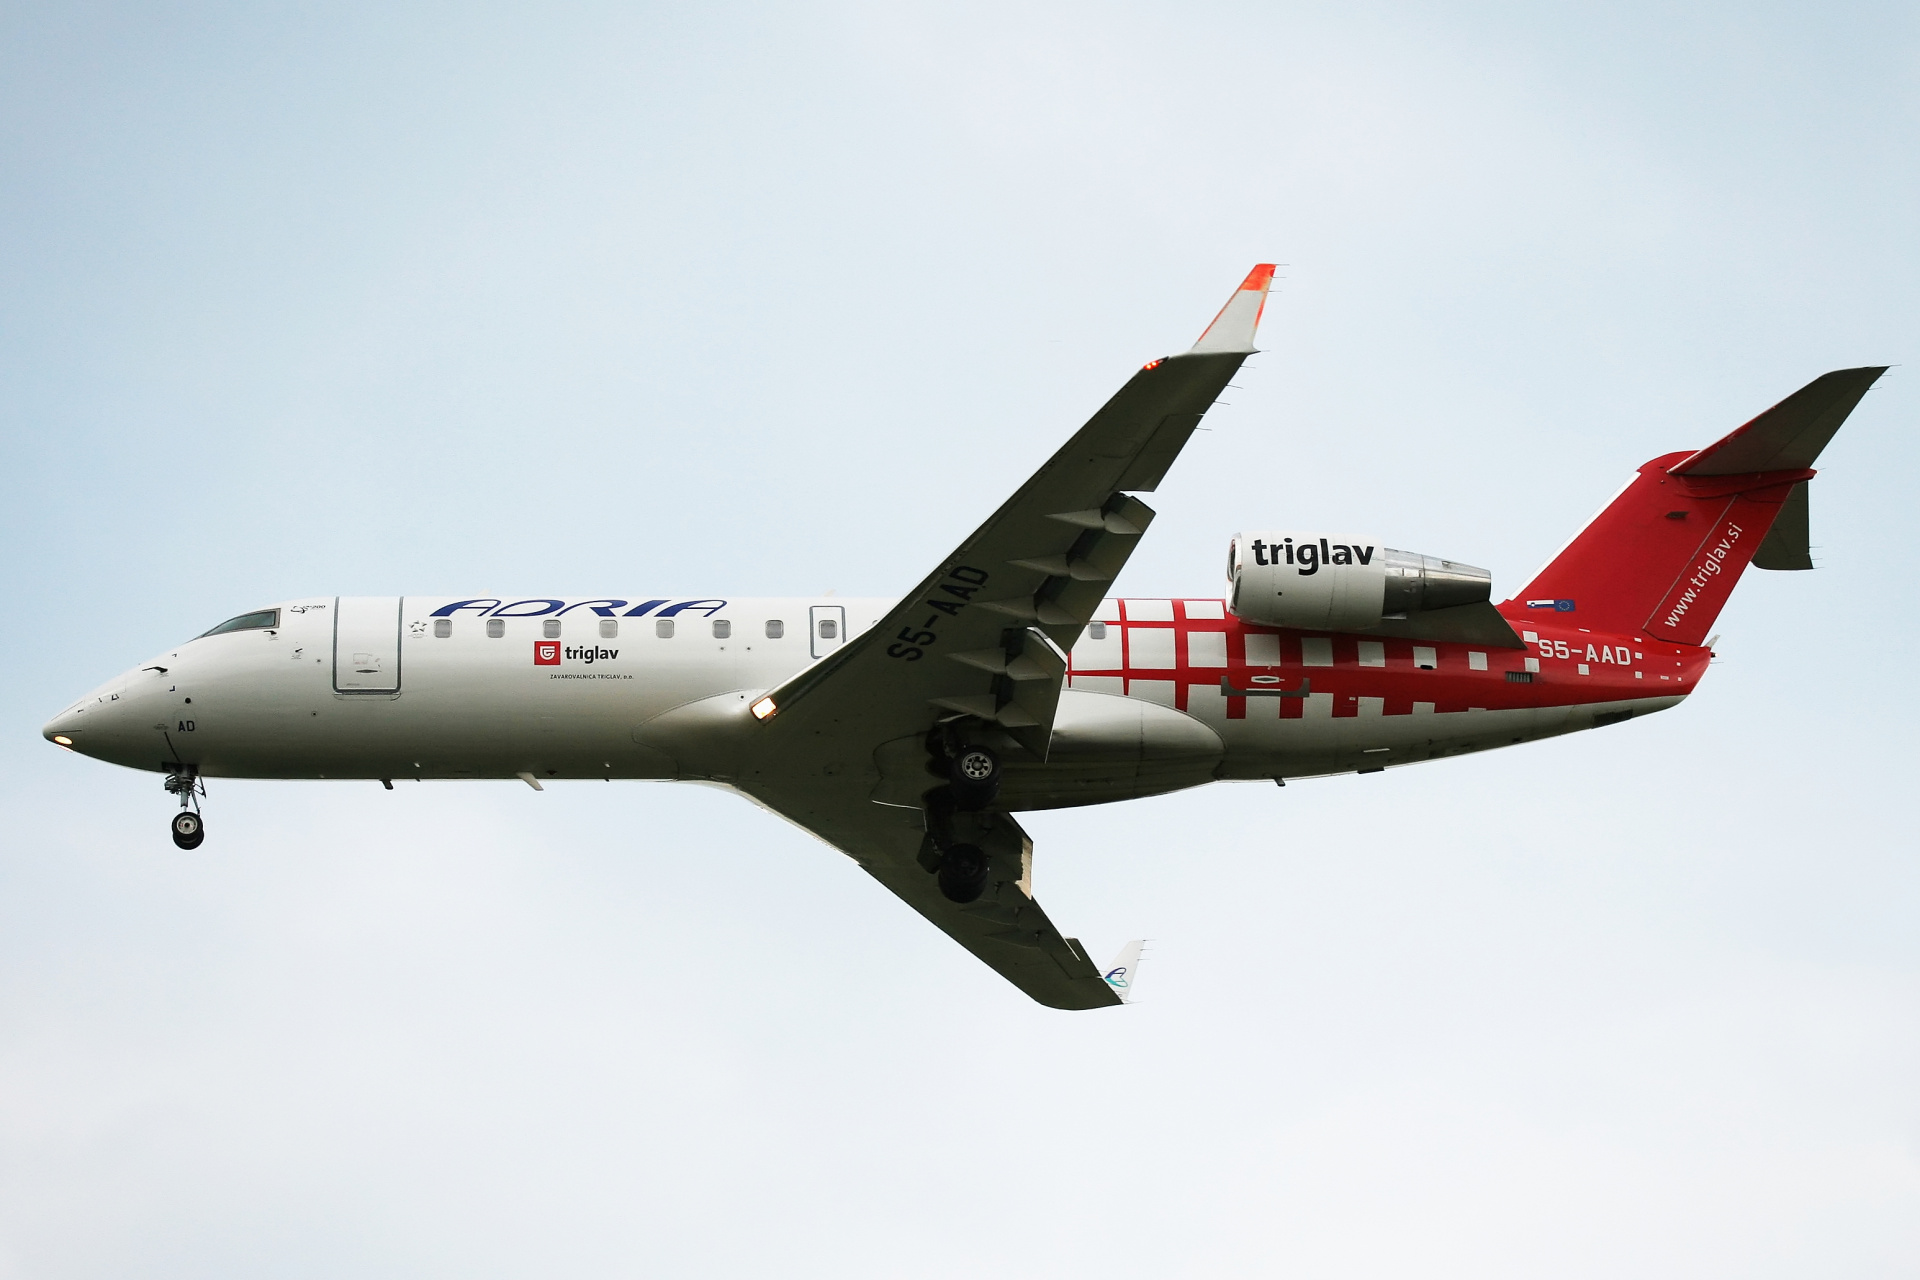 S5-AAD (Tiglav livery) (Aircraft » EPWA Spotting » Bombardier CL-600 Regional Jet » CRJ-200 » Adria Airways)